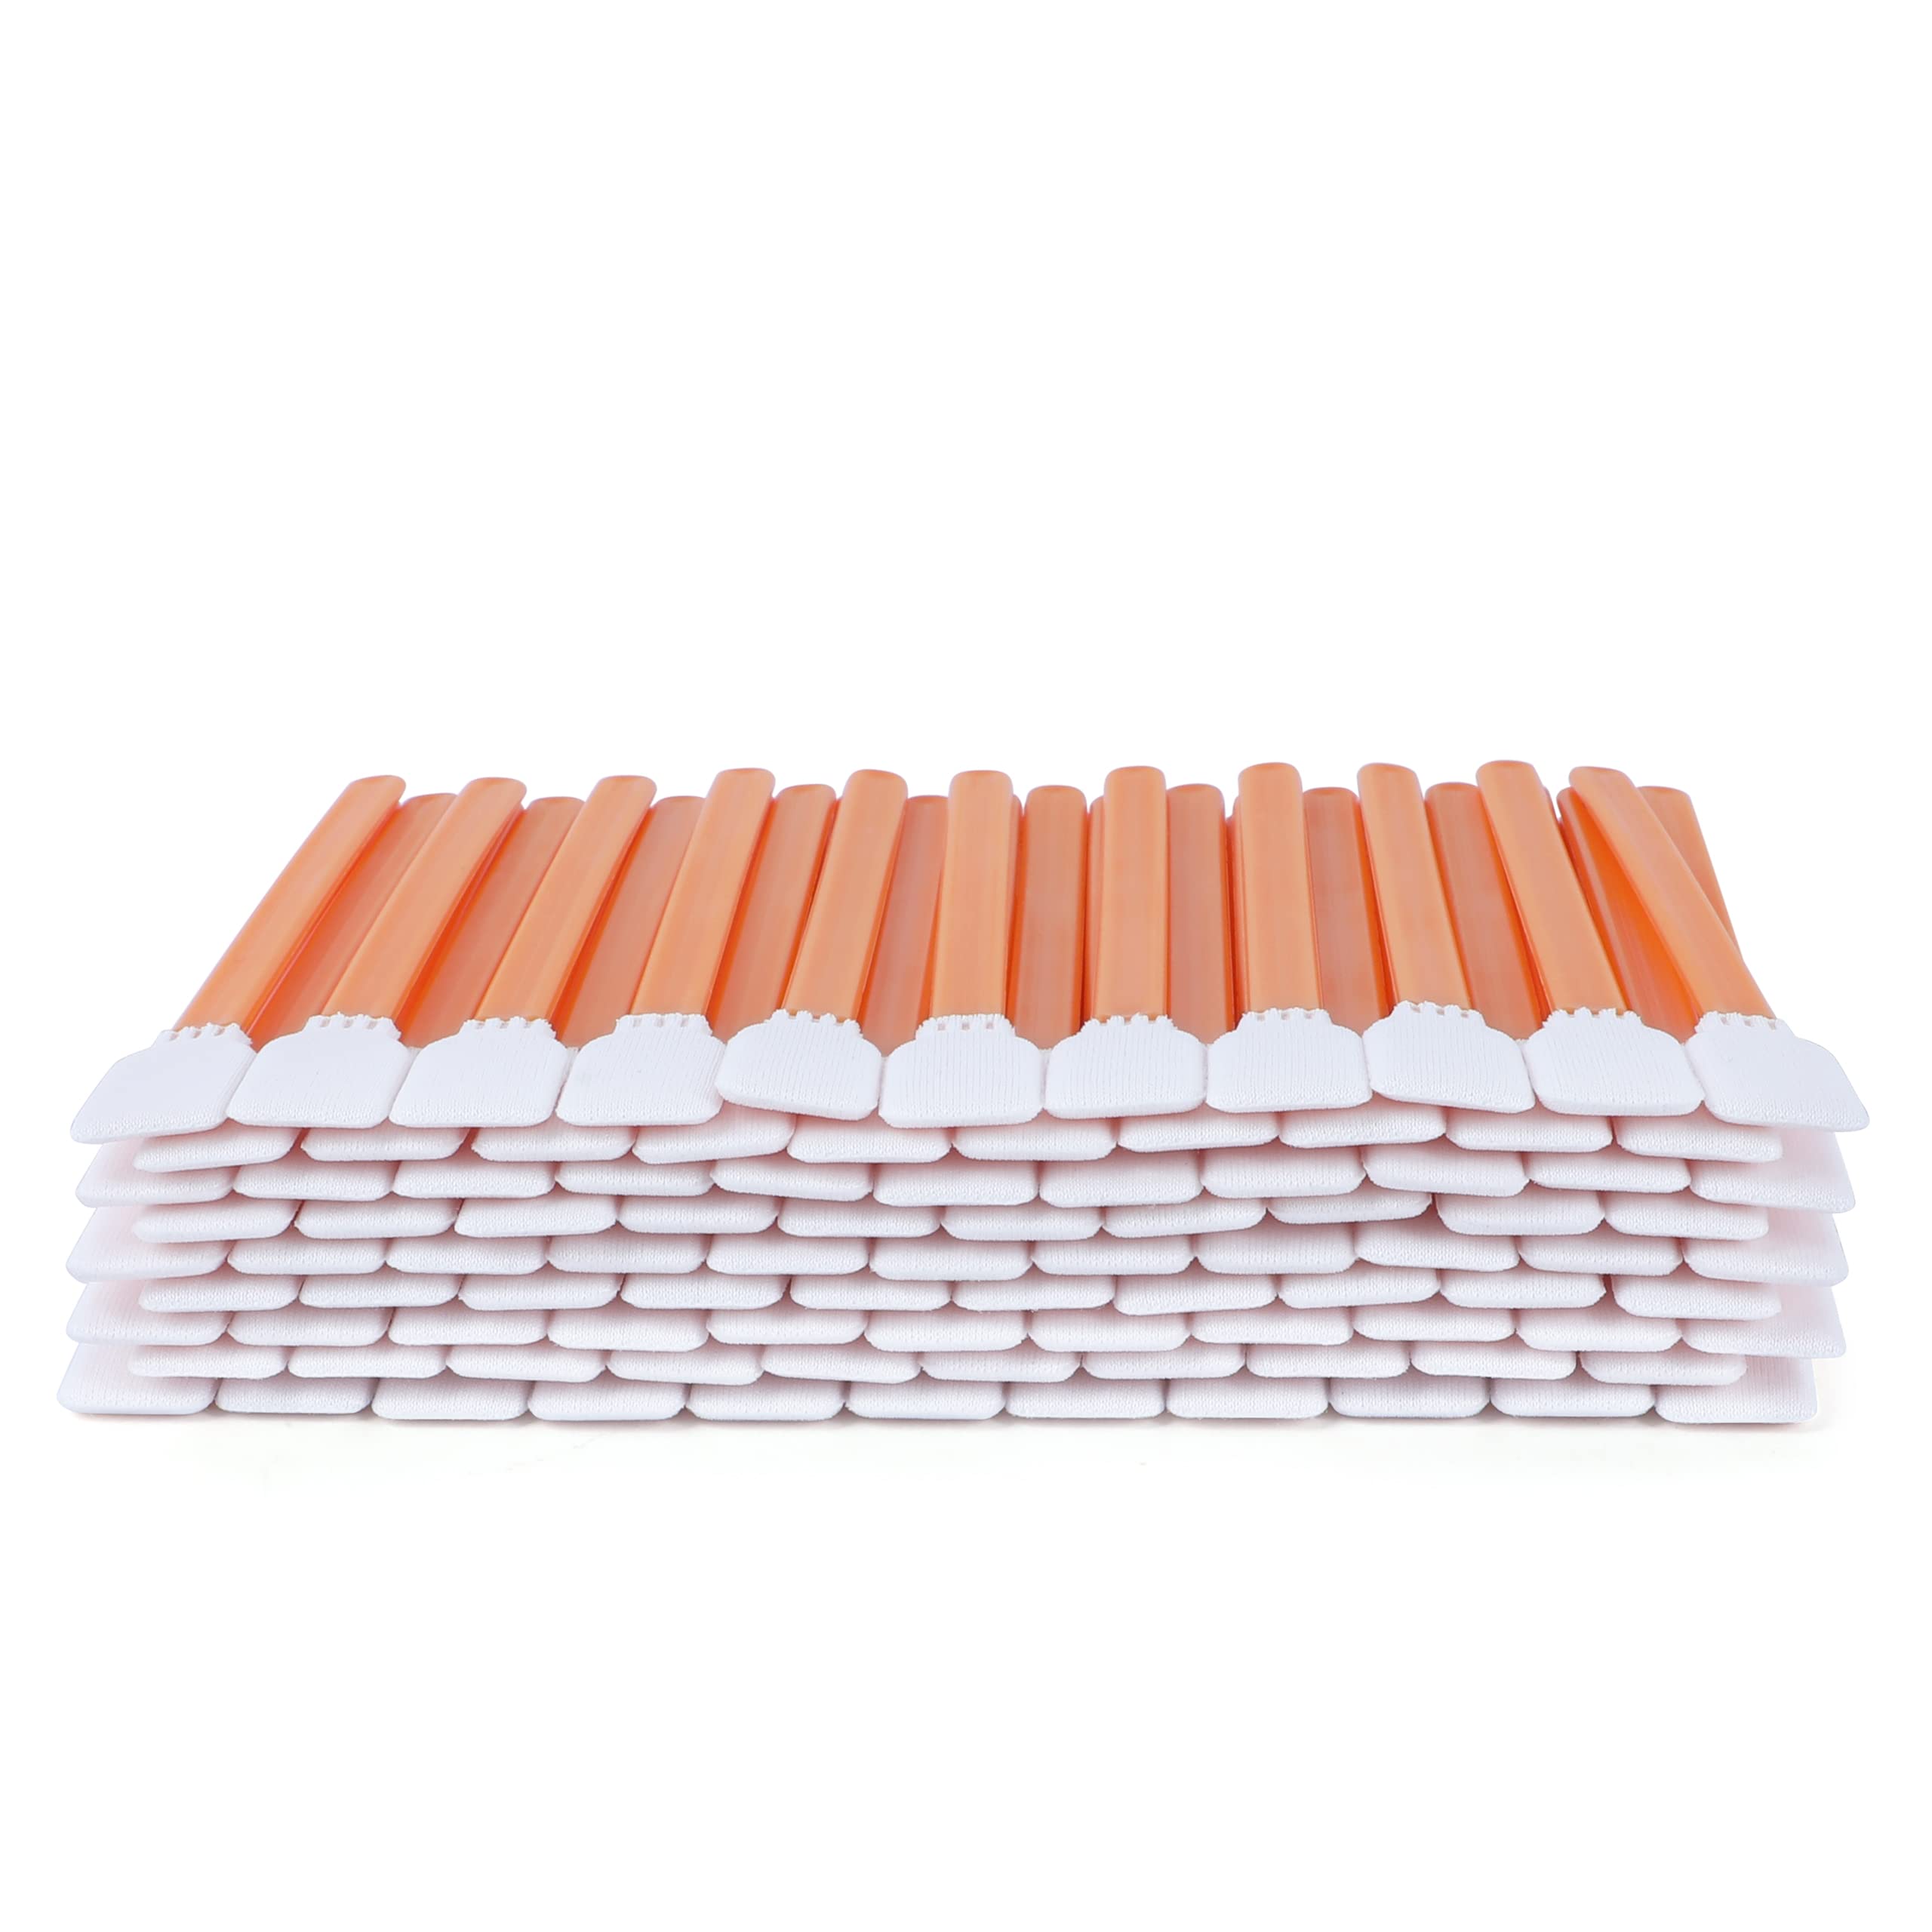 5" Cleanroom Swabs (100 pcs, Length/Swab Head Width=125 mm/14.5 mm, Orange, Rectangular Flat Head) Knitted Polyester Swabs Mid-Size General Purpose Lab Swab Sticks (A7145B-1000)